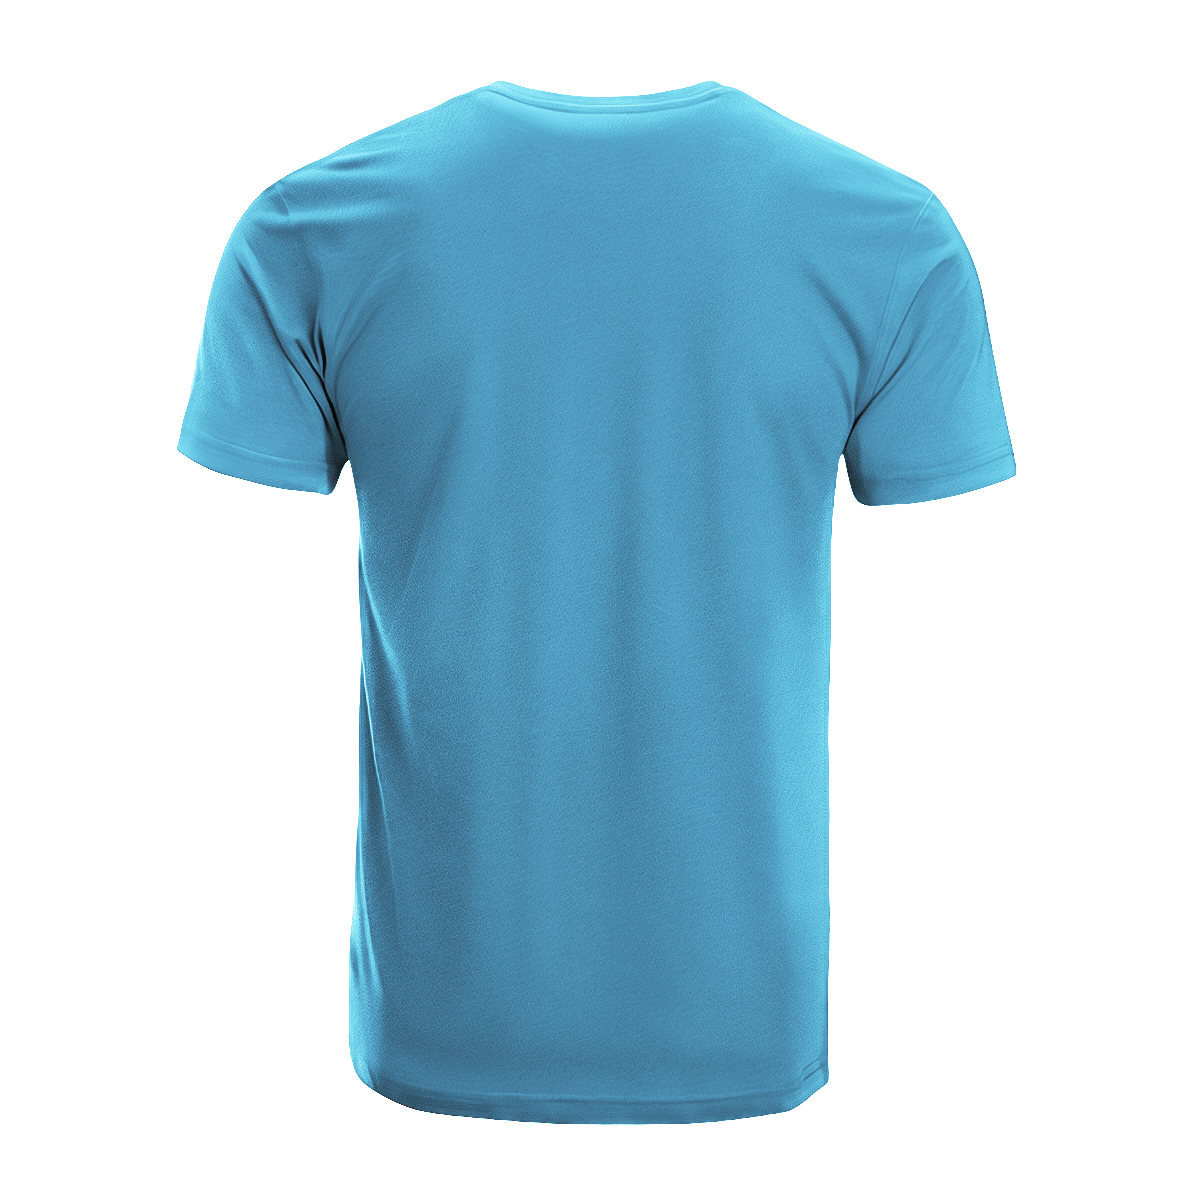 MacIver Tartan Crest T-shirt - I'm not yelling style